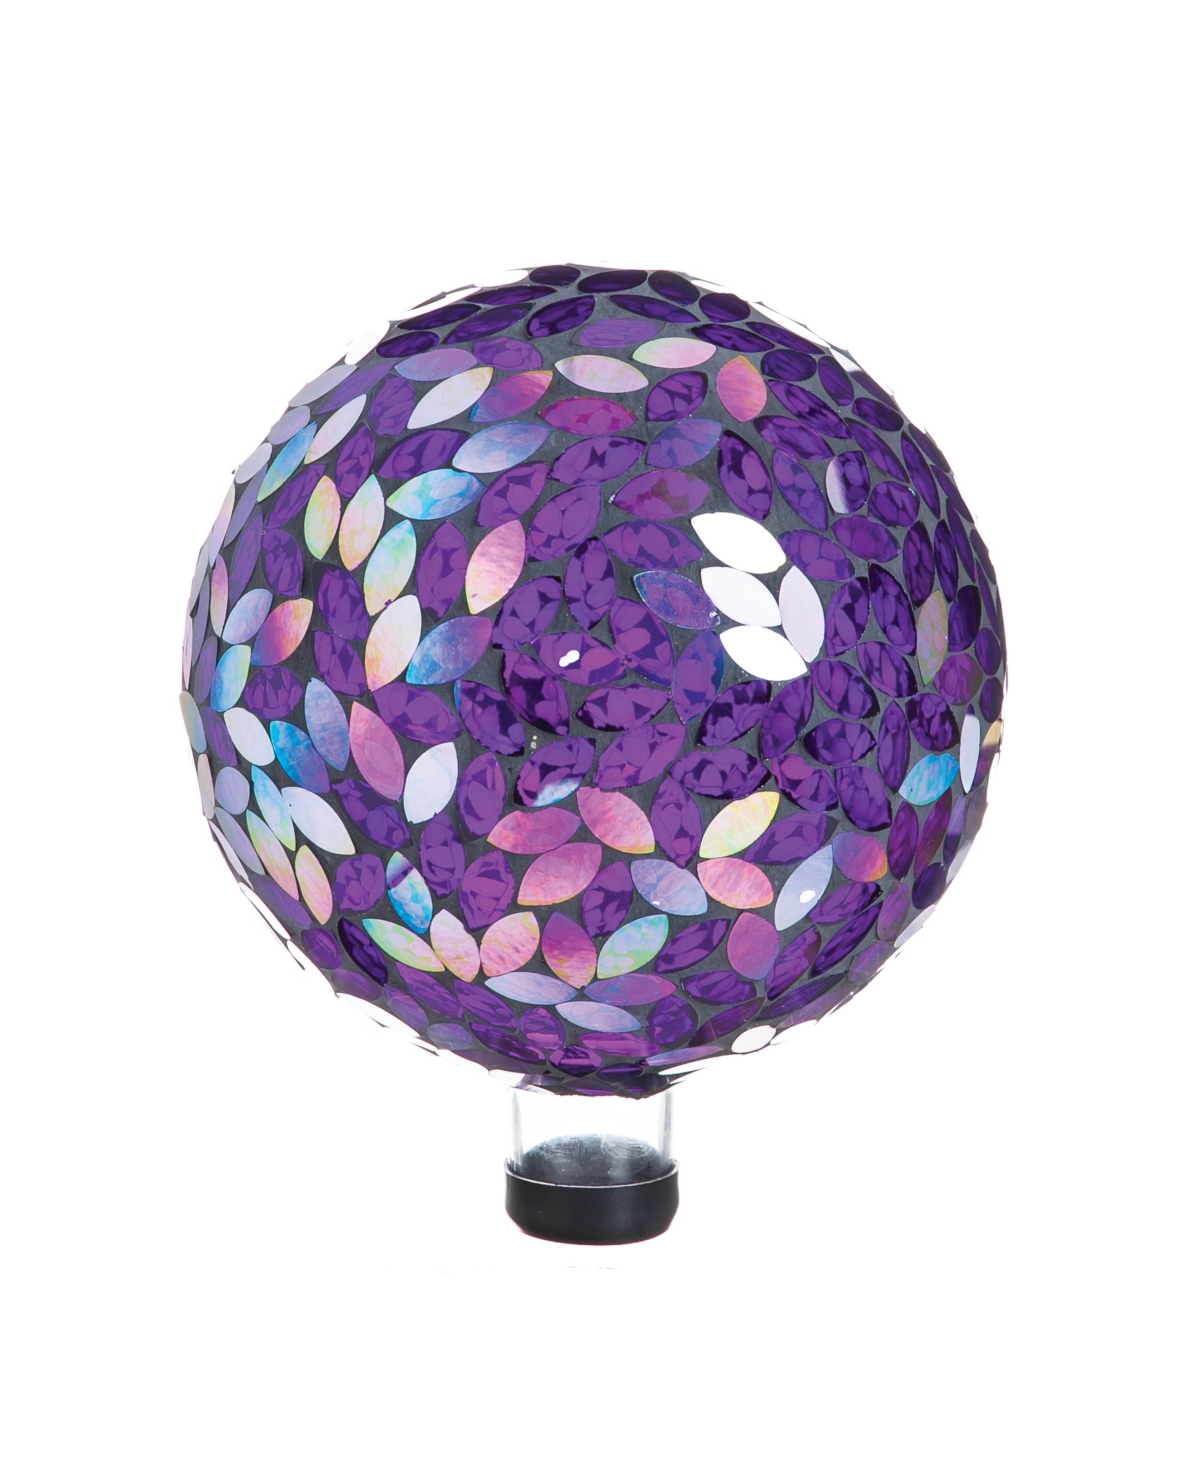 Flower Petal Mosaic Gazing Ball - Multicolored